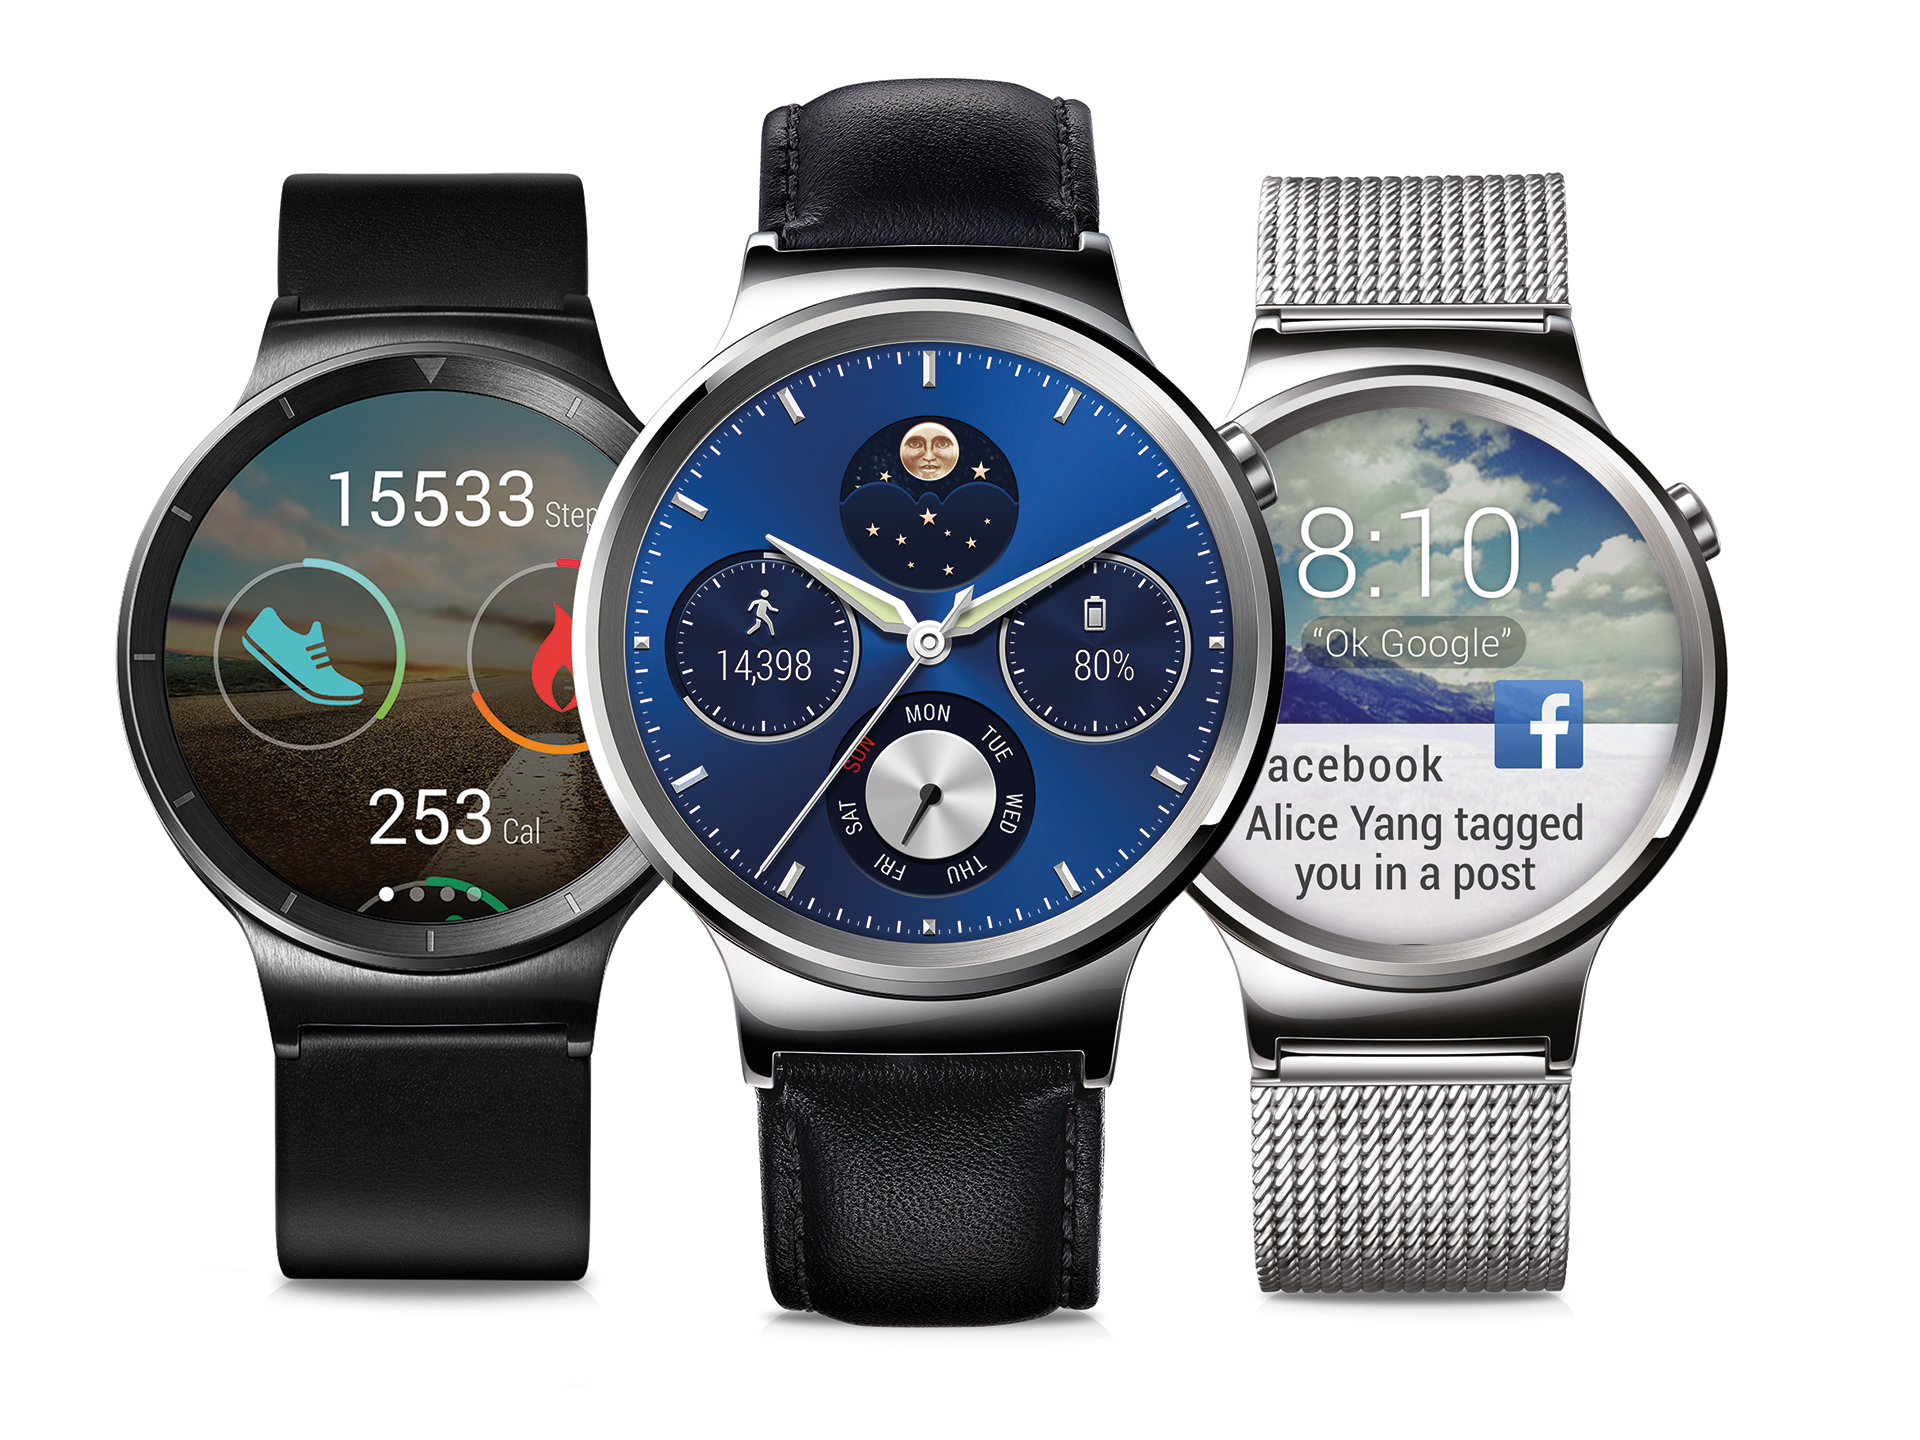 Huawei Watch Smartwatch Review - NotebookCheck.net Reviews